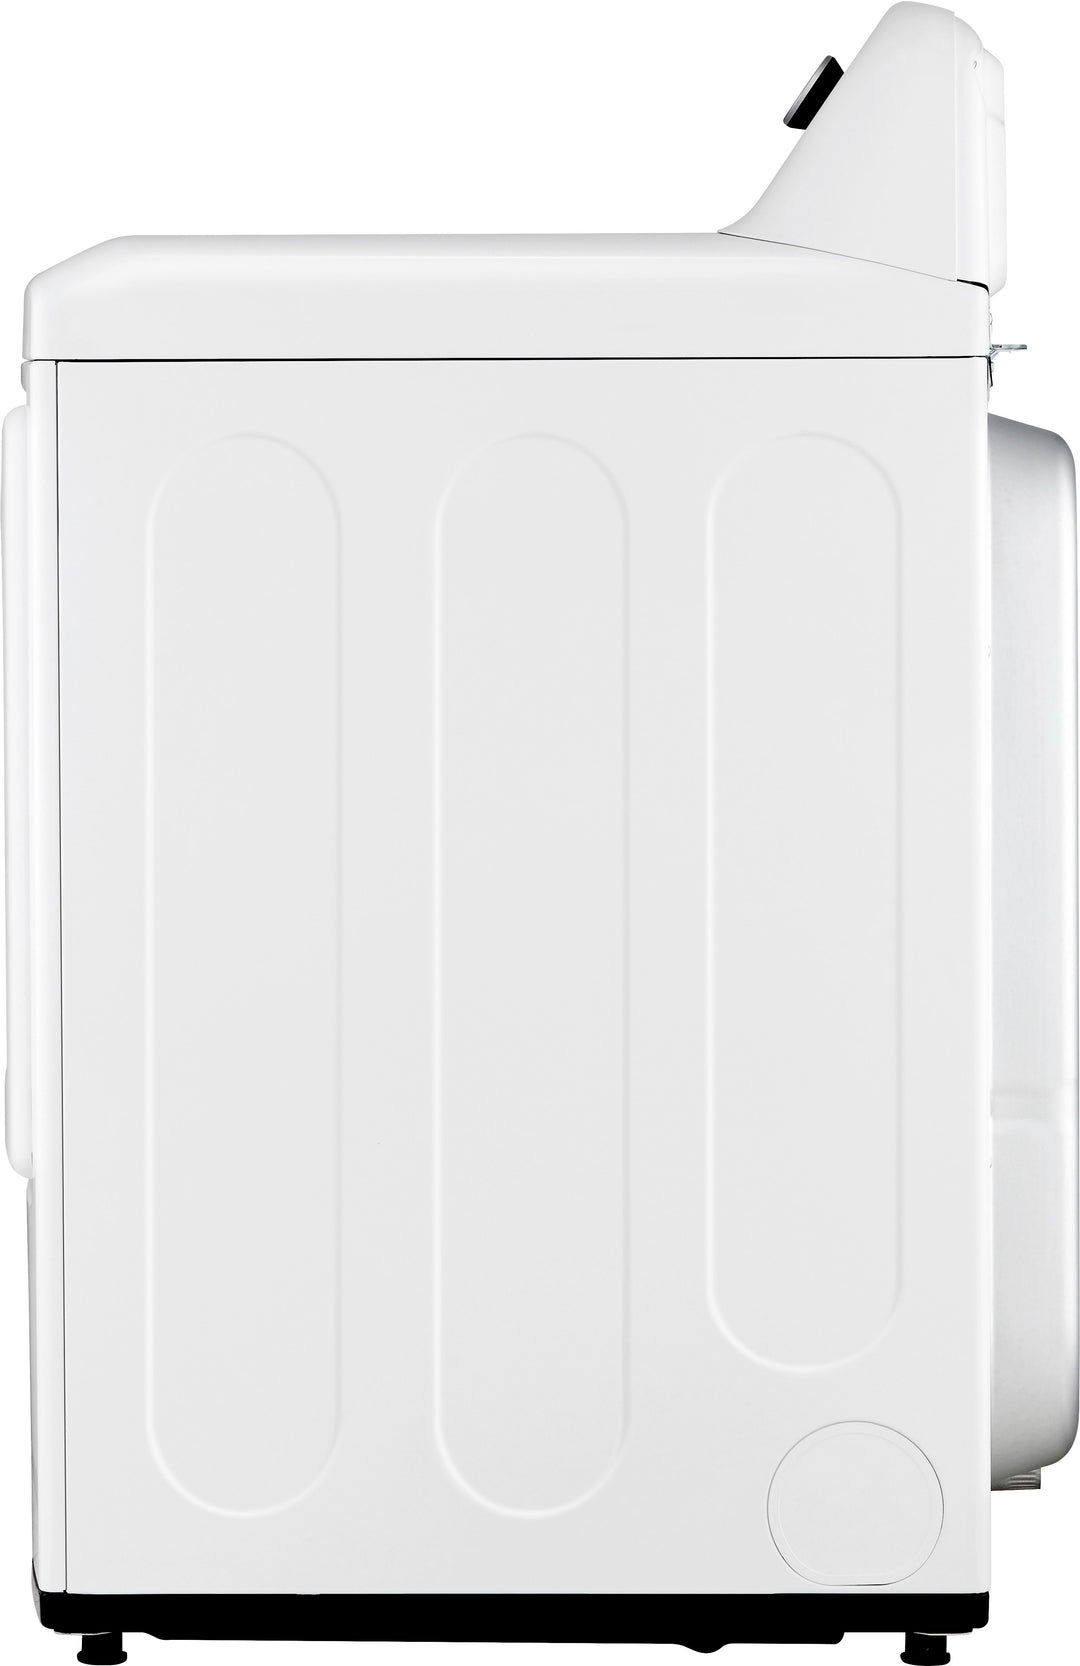 LG - 7.3 Cu. Ft. Smart Electric Dryer with EasyLoad Door - White_5